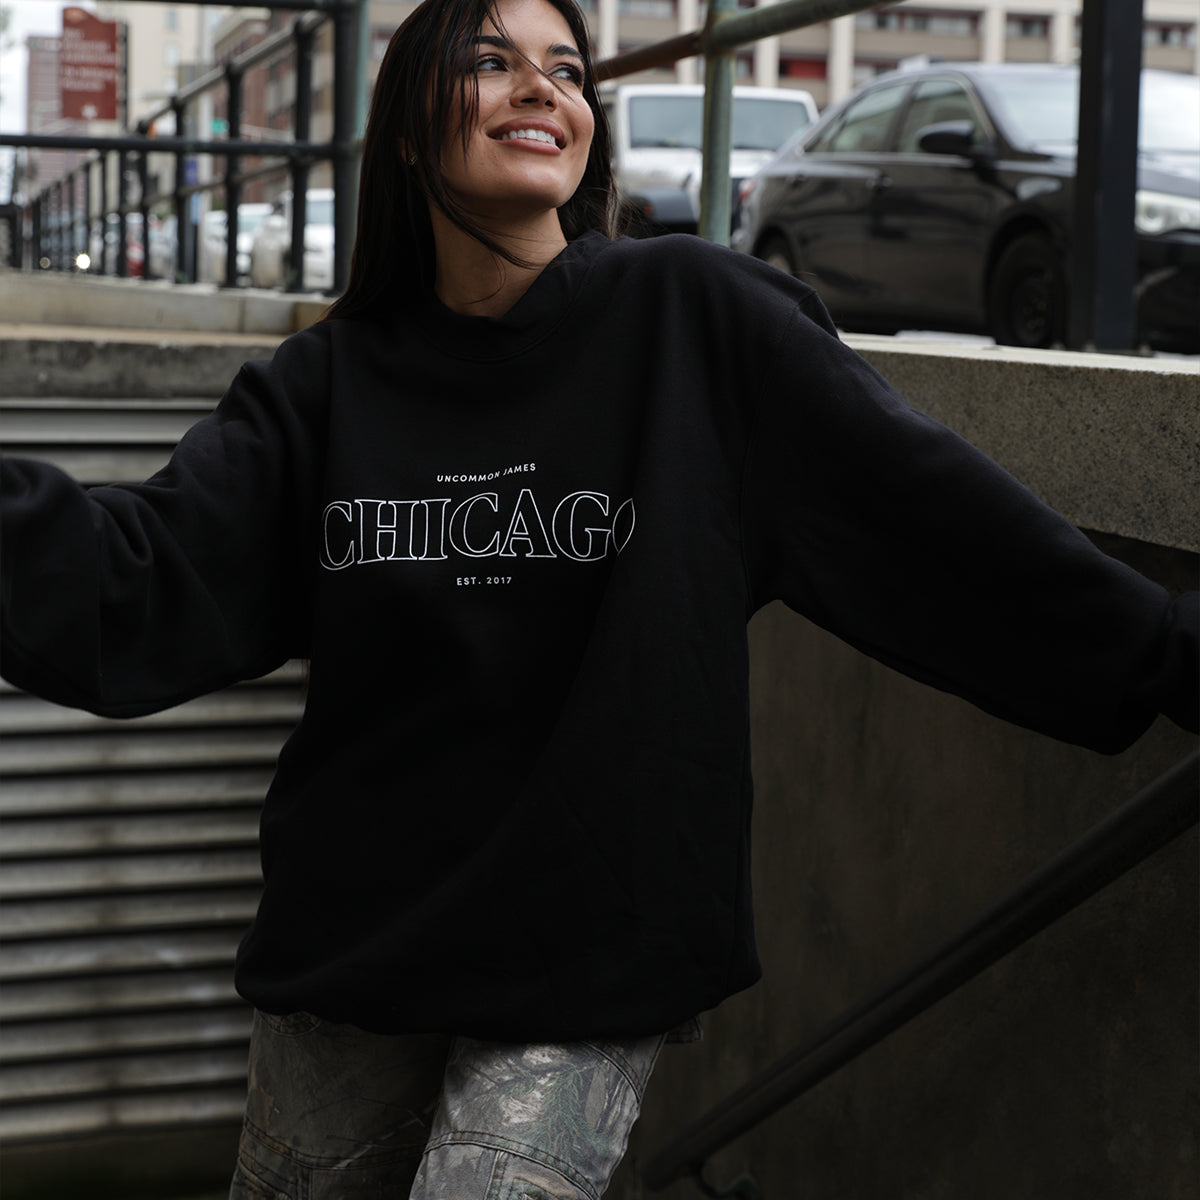 Chicago Sweatshirt | Black | Lifestyle Image | Uncommon James